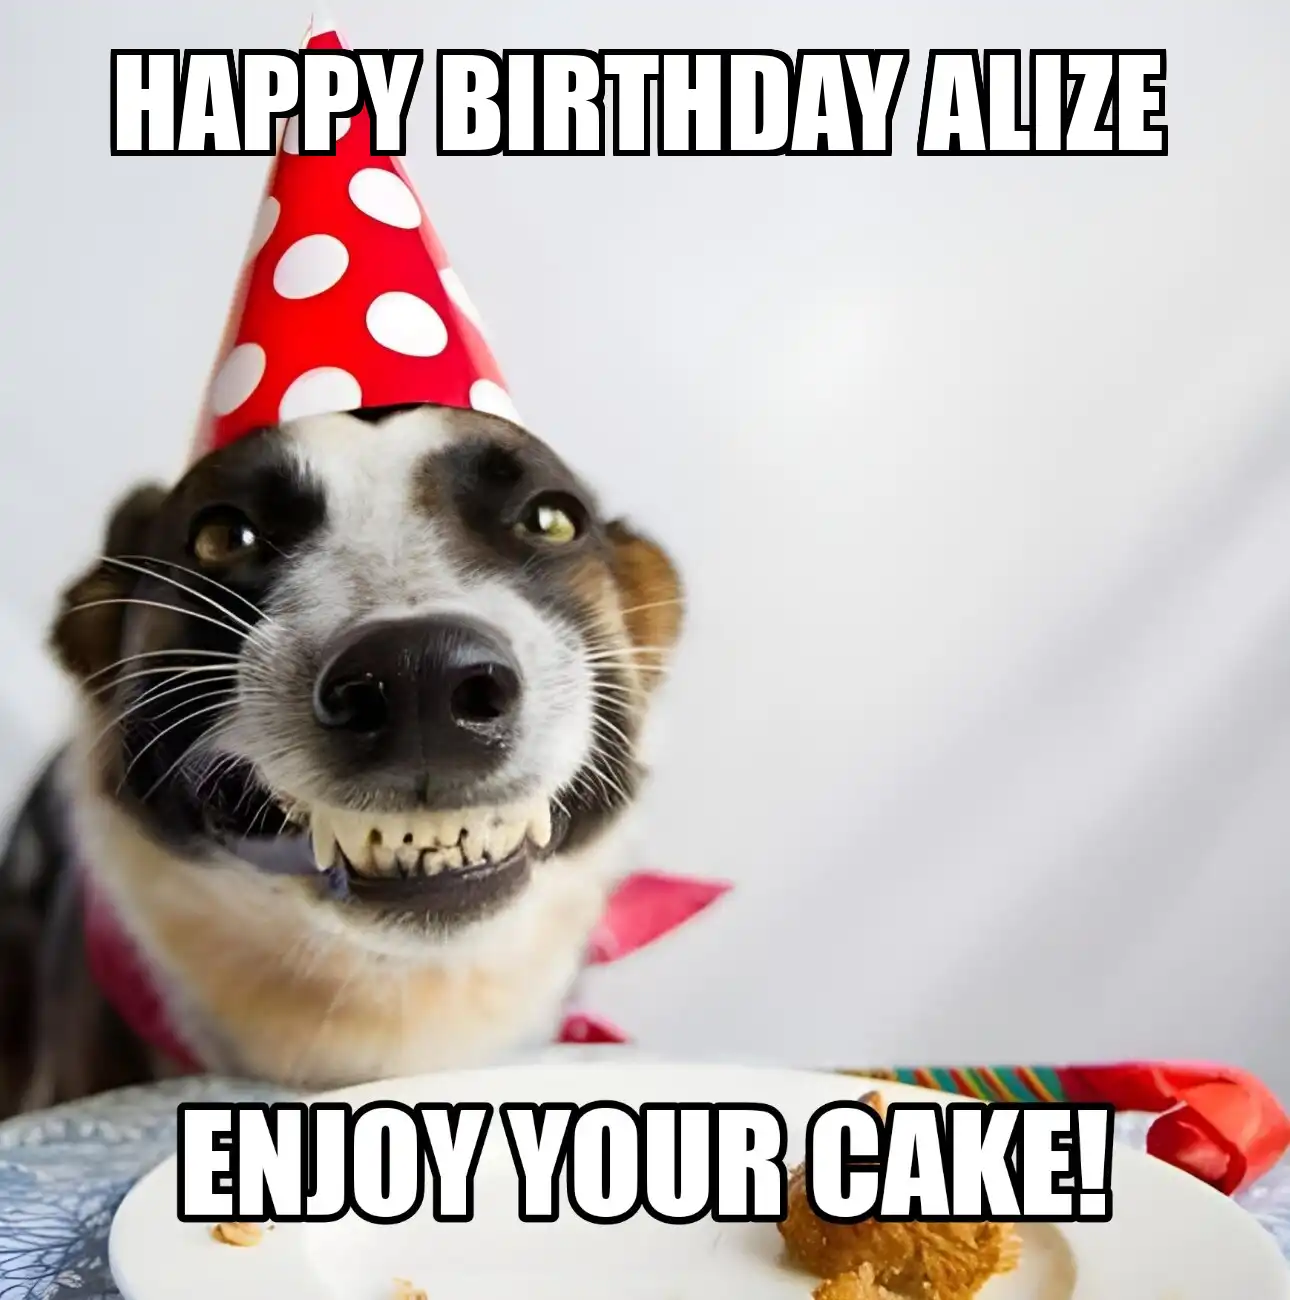 Happy Birthday Alize Enjoy Your Cake Dog Meme